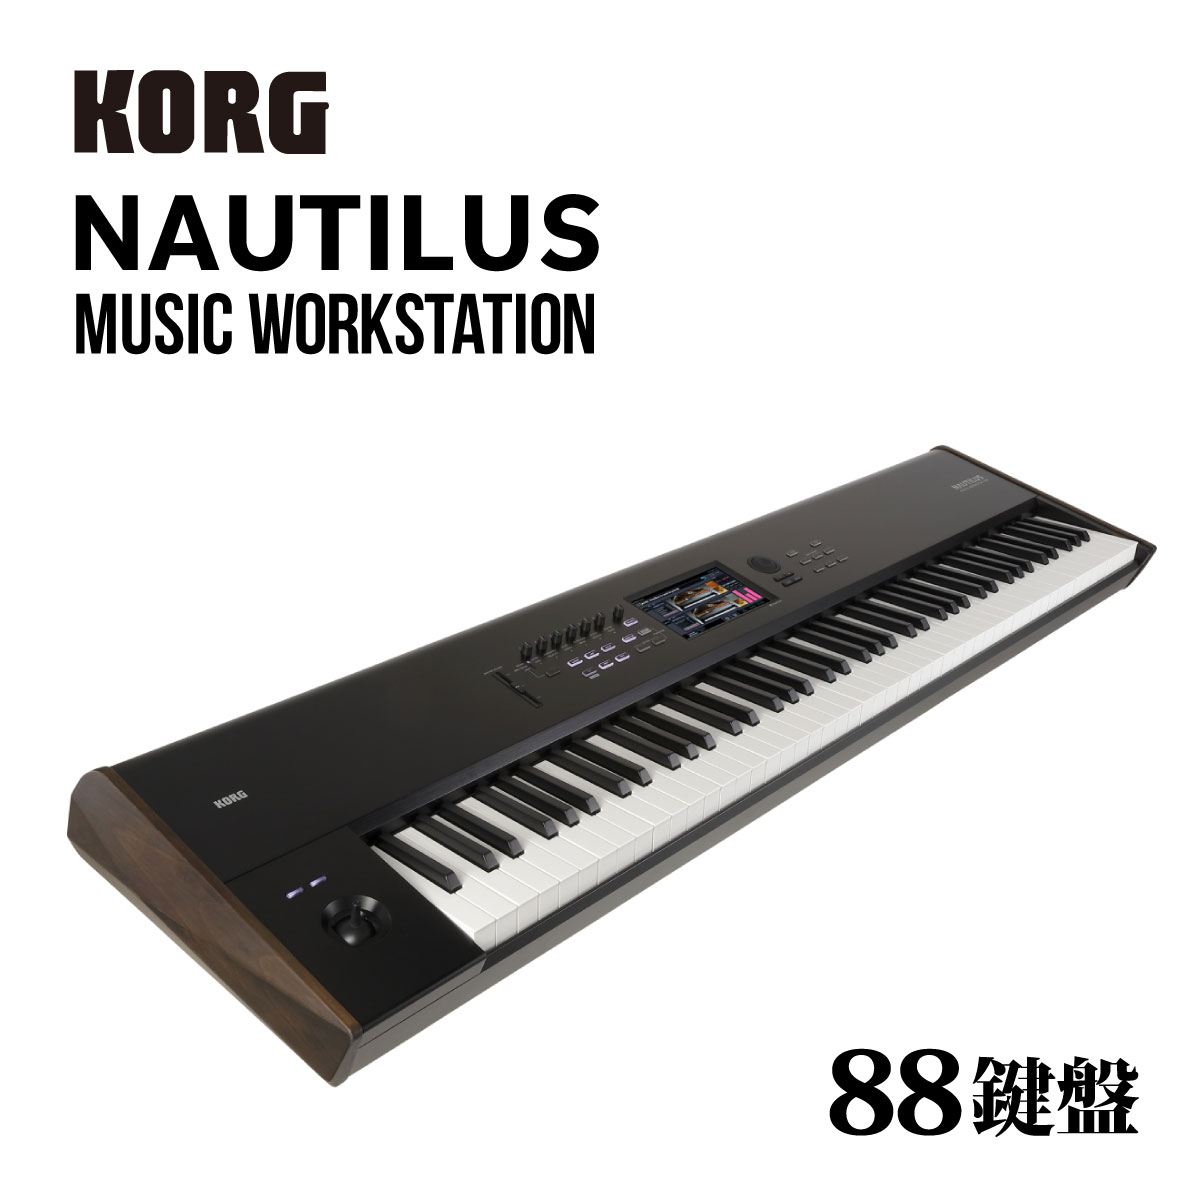 KORG NAUTILUS 新品 88鍵盤 シンセサイザー[コルグ][ノーチラス][88Keys][電子ピアノ][Synthesizer,シンセサイザー][Keyboard,キーボード]